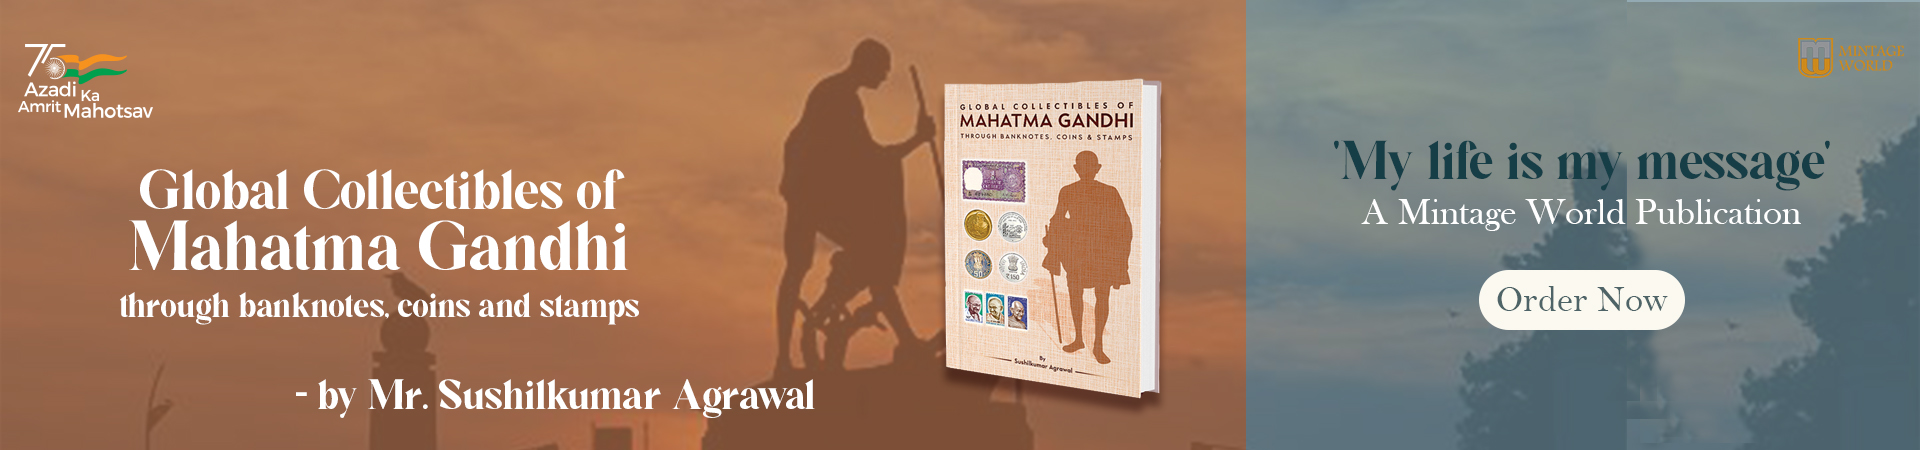 Gandhi Book